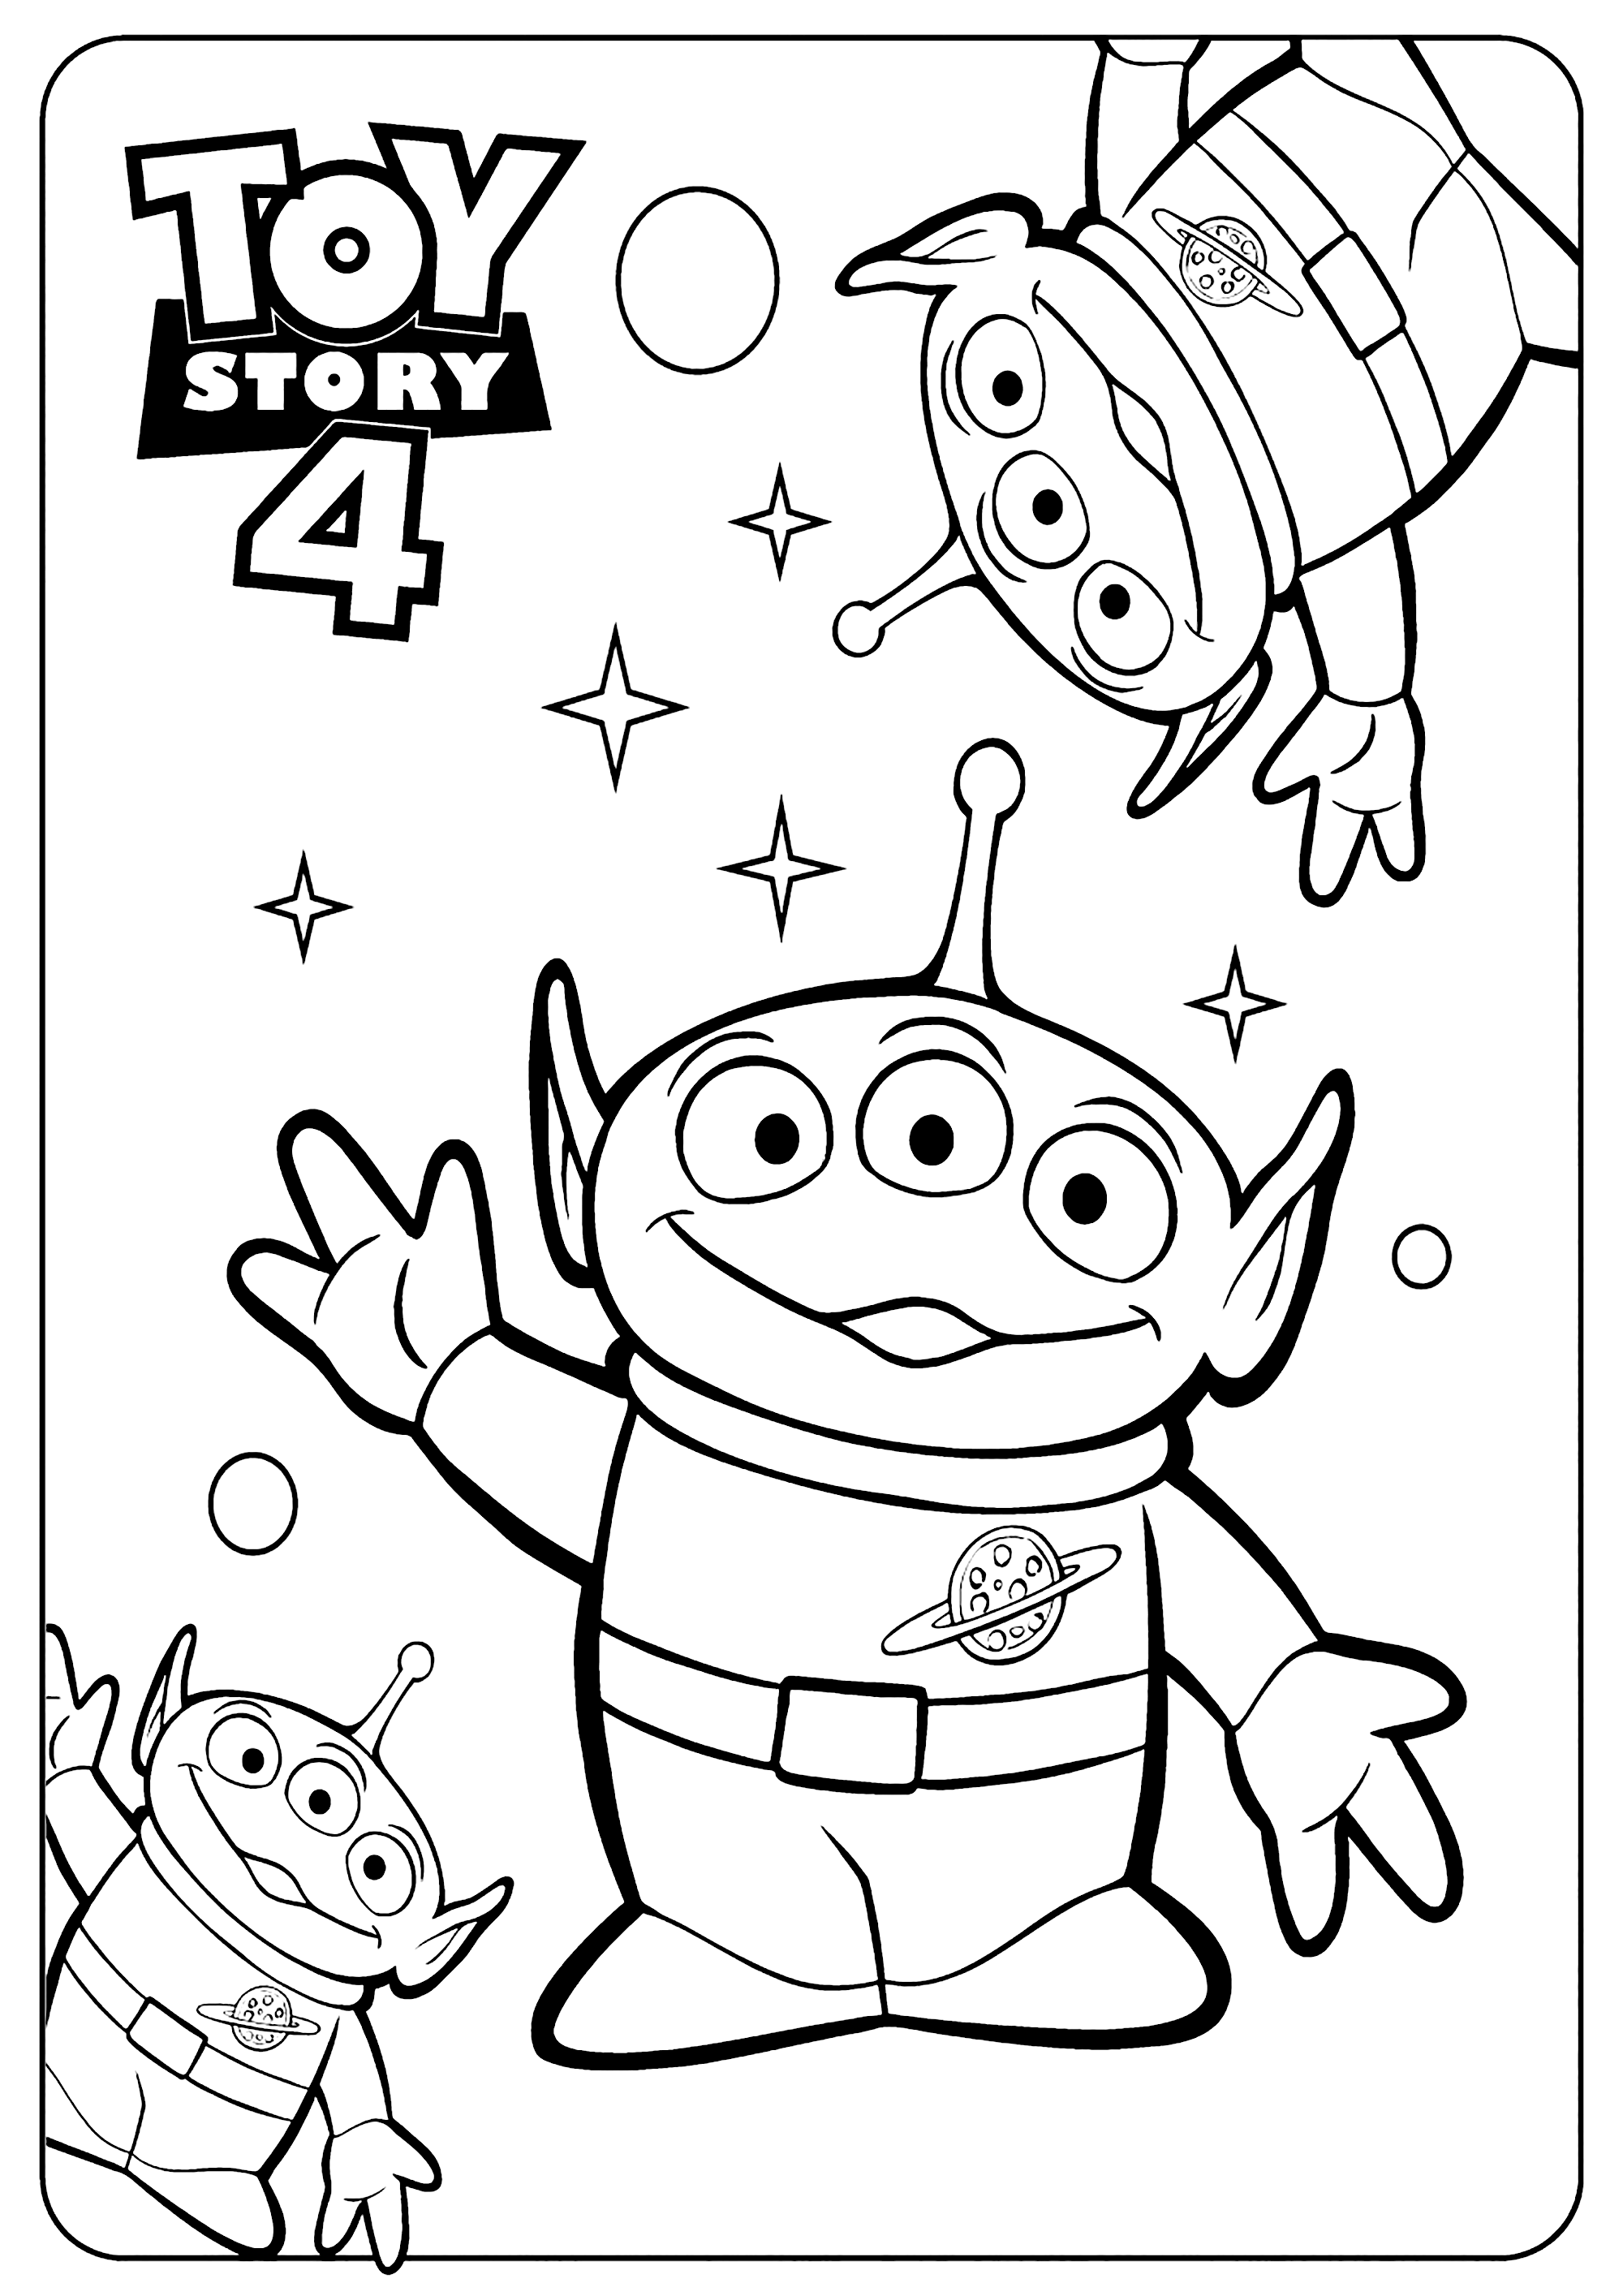 Bo Peep Toy Story 4 coloring page (Disney / Pixar) Toy Story 4 Kids